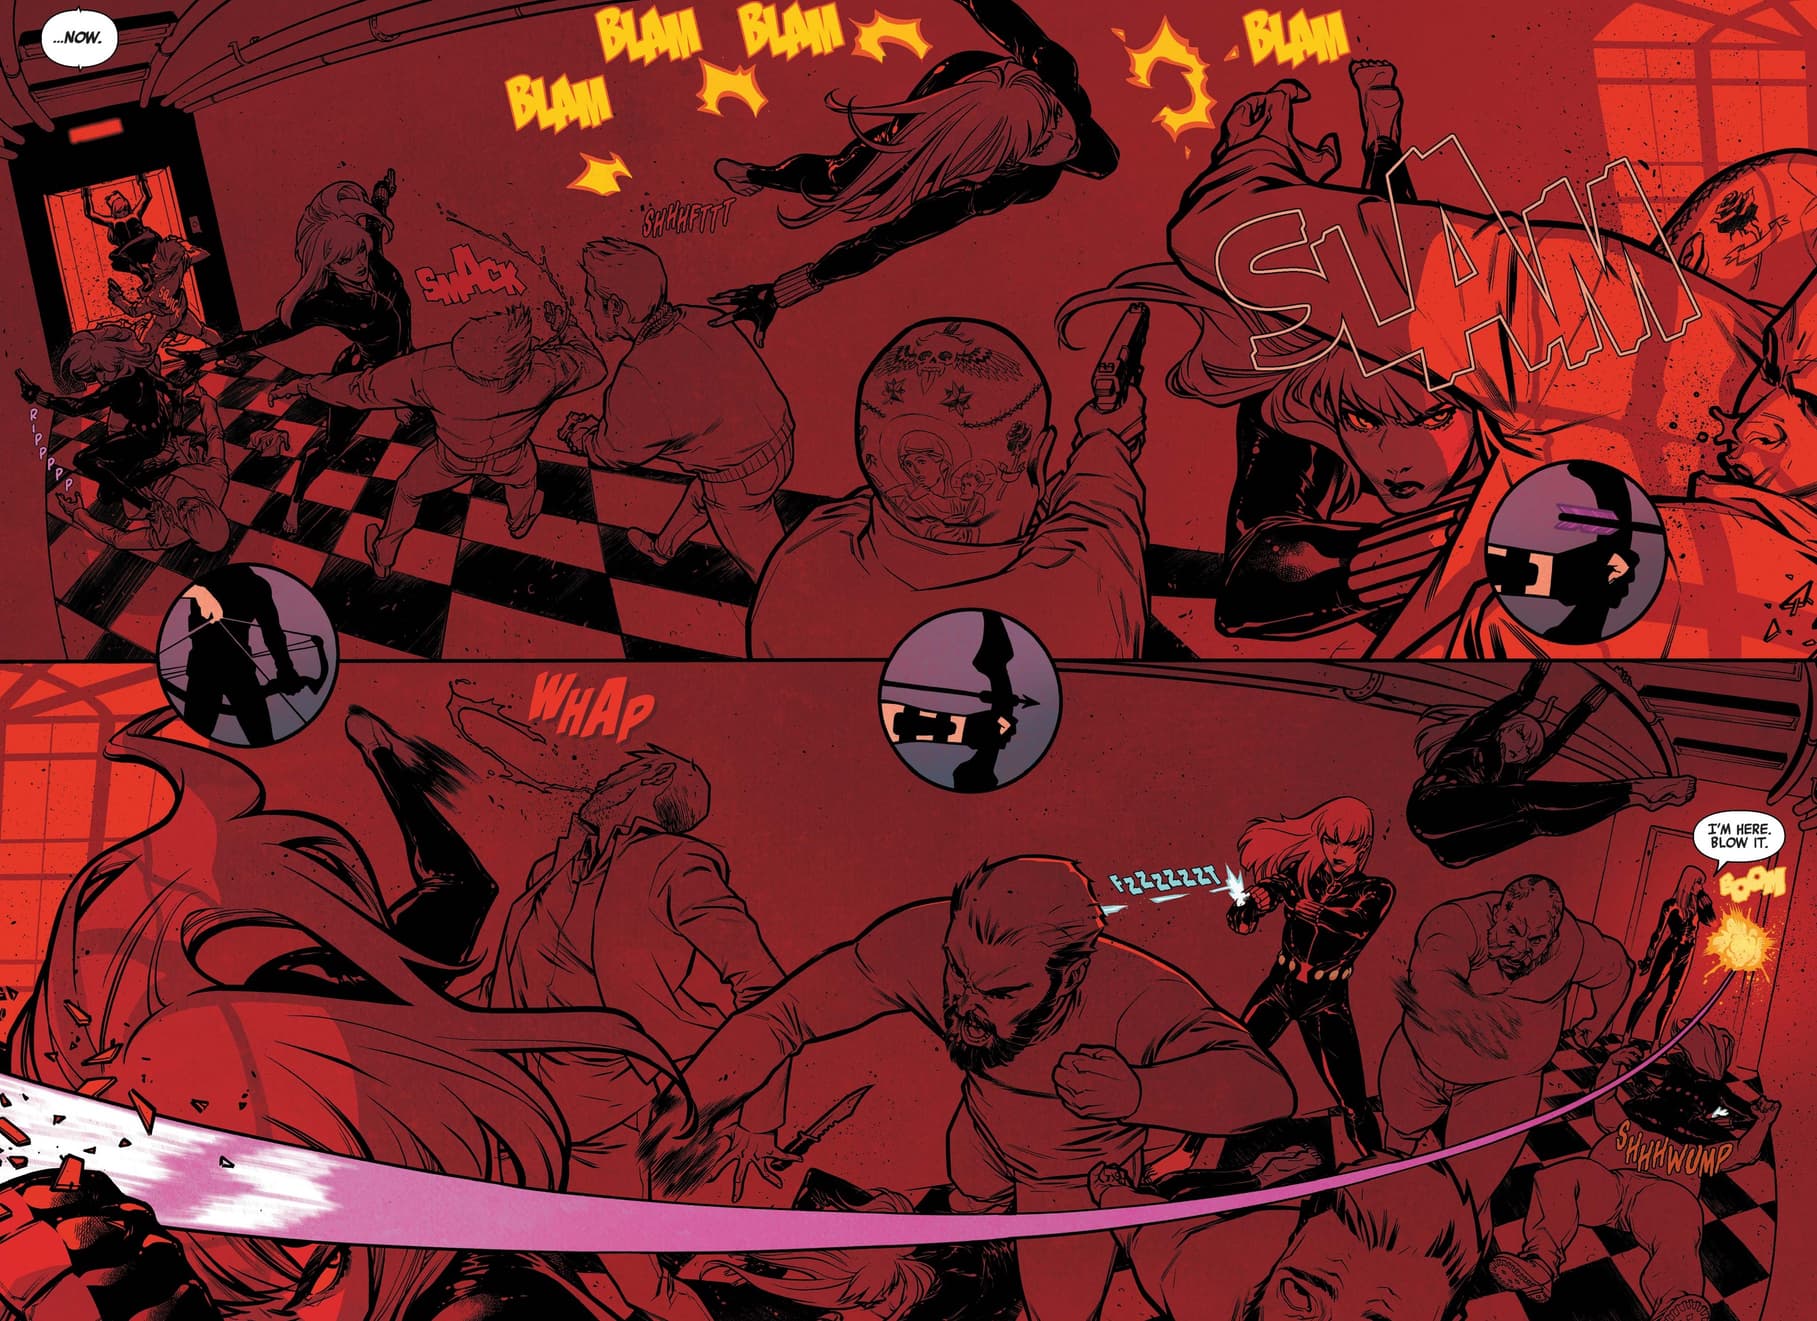 Natasha kicks up some conflict in Black Widow (2020) #1.